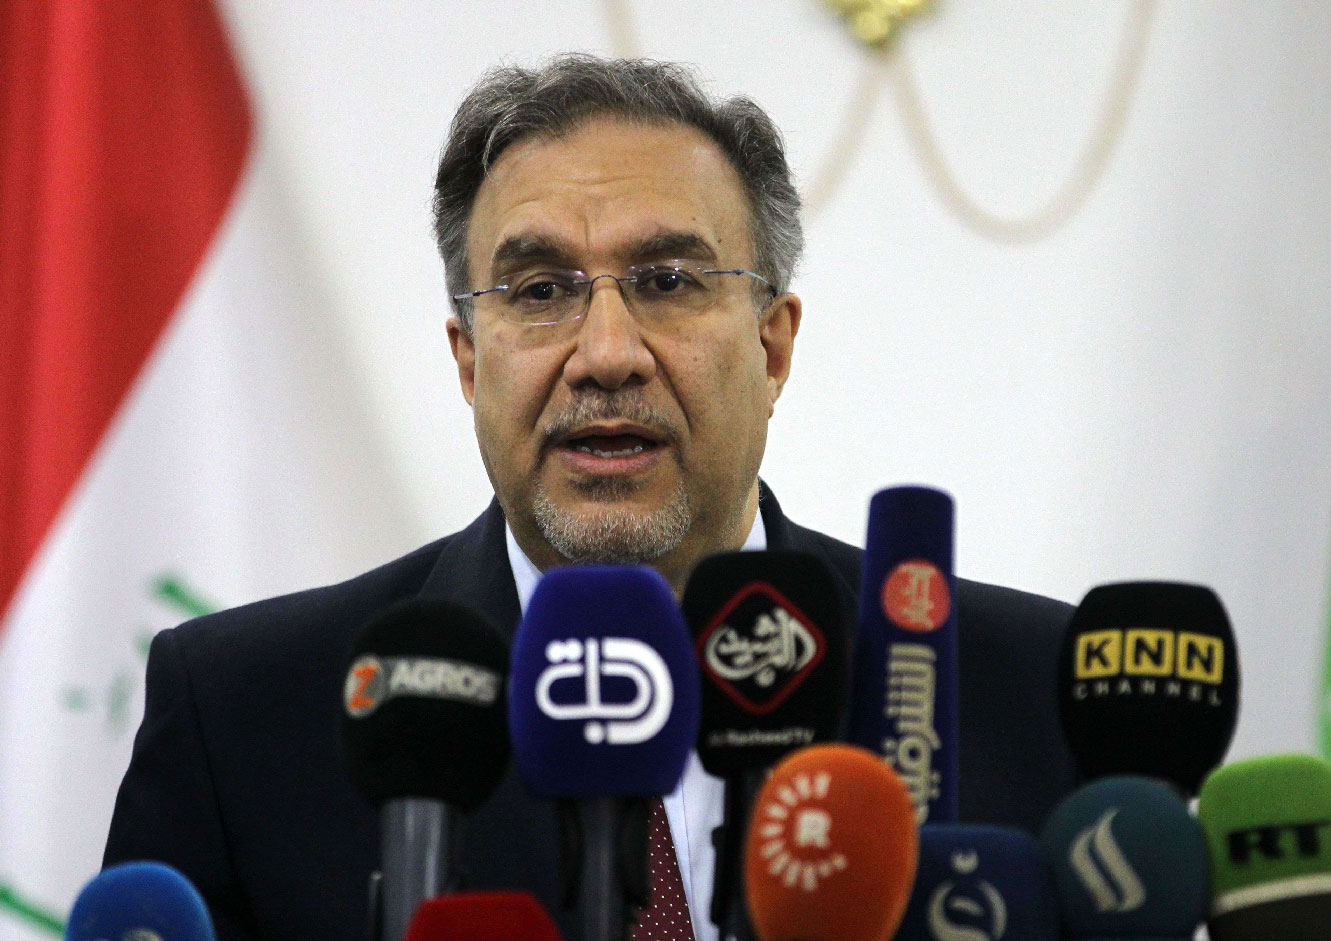 Iraq's Electricity Minister Luay al-Khateeb